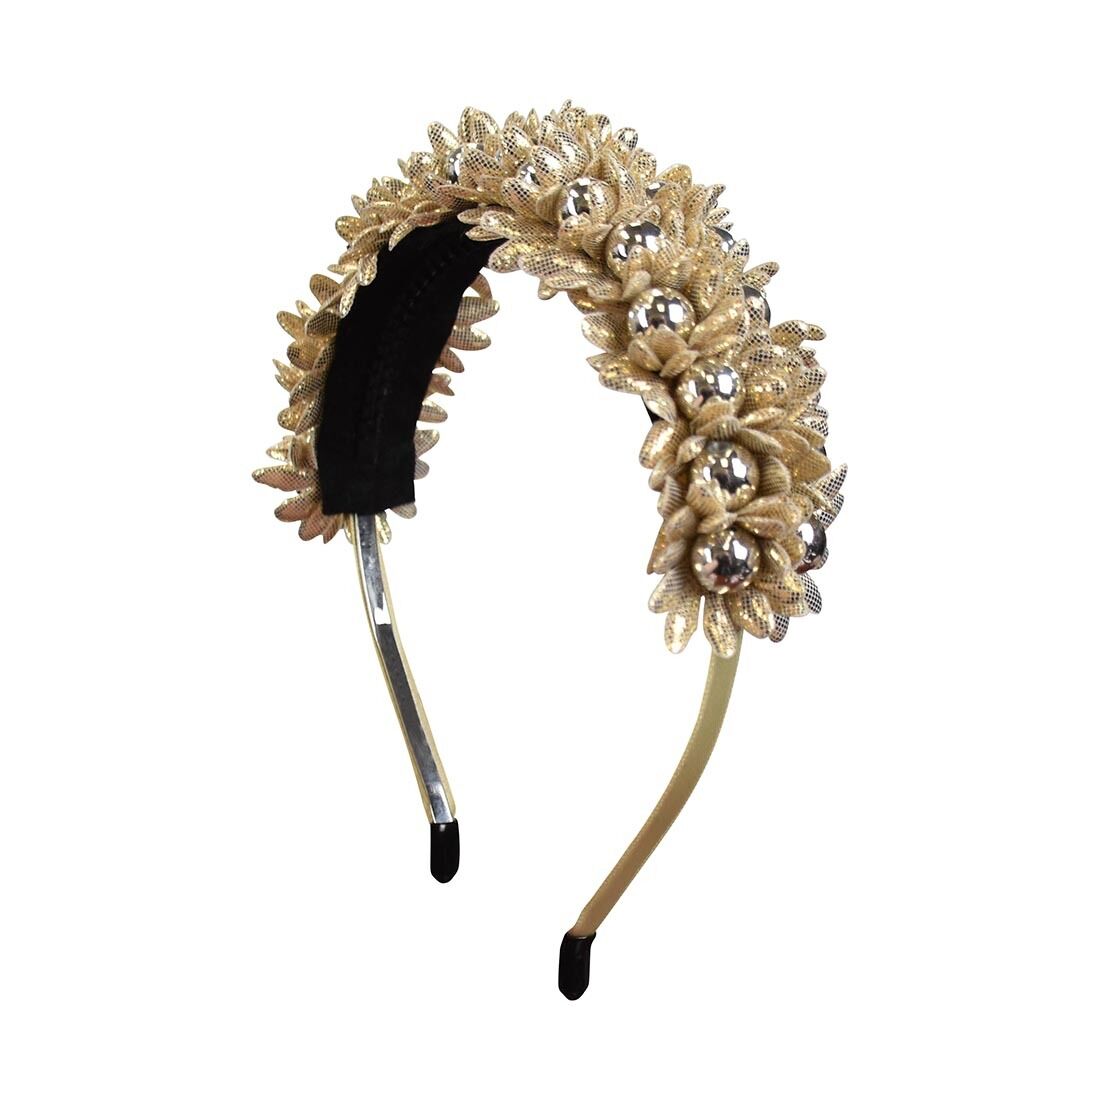 Hard Headband Tinsel with Beads Stunning Wreath Girls Hair Band w/Teeth